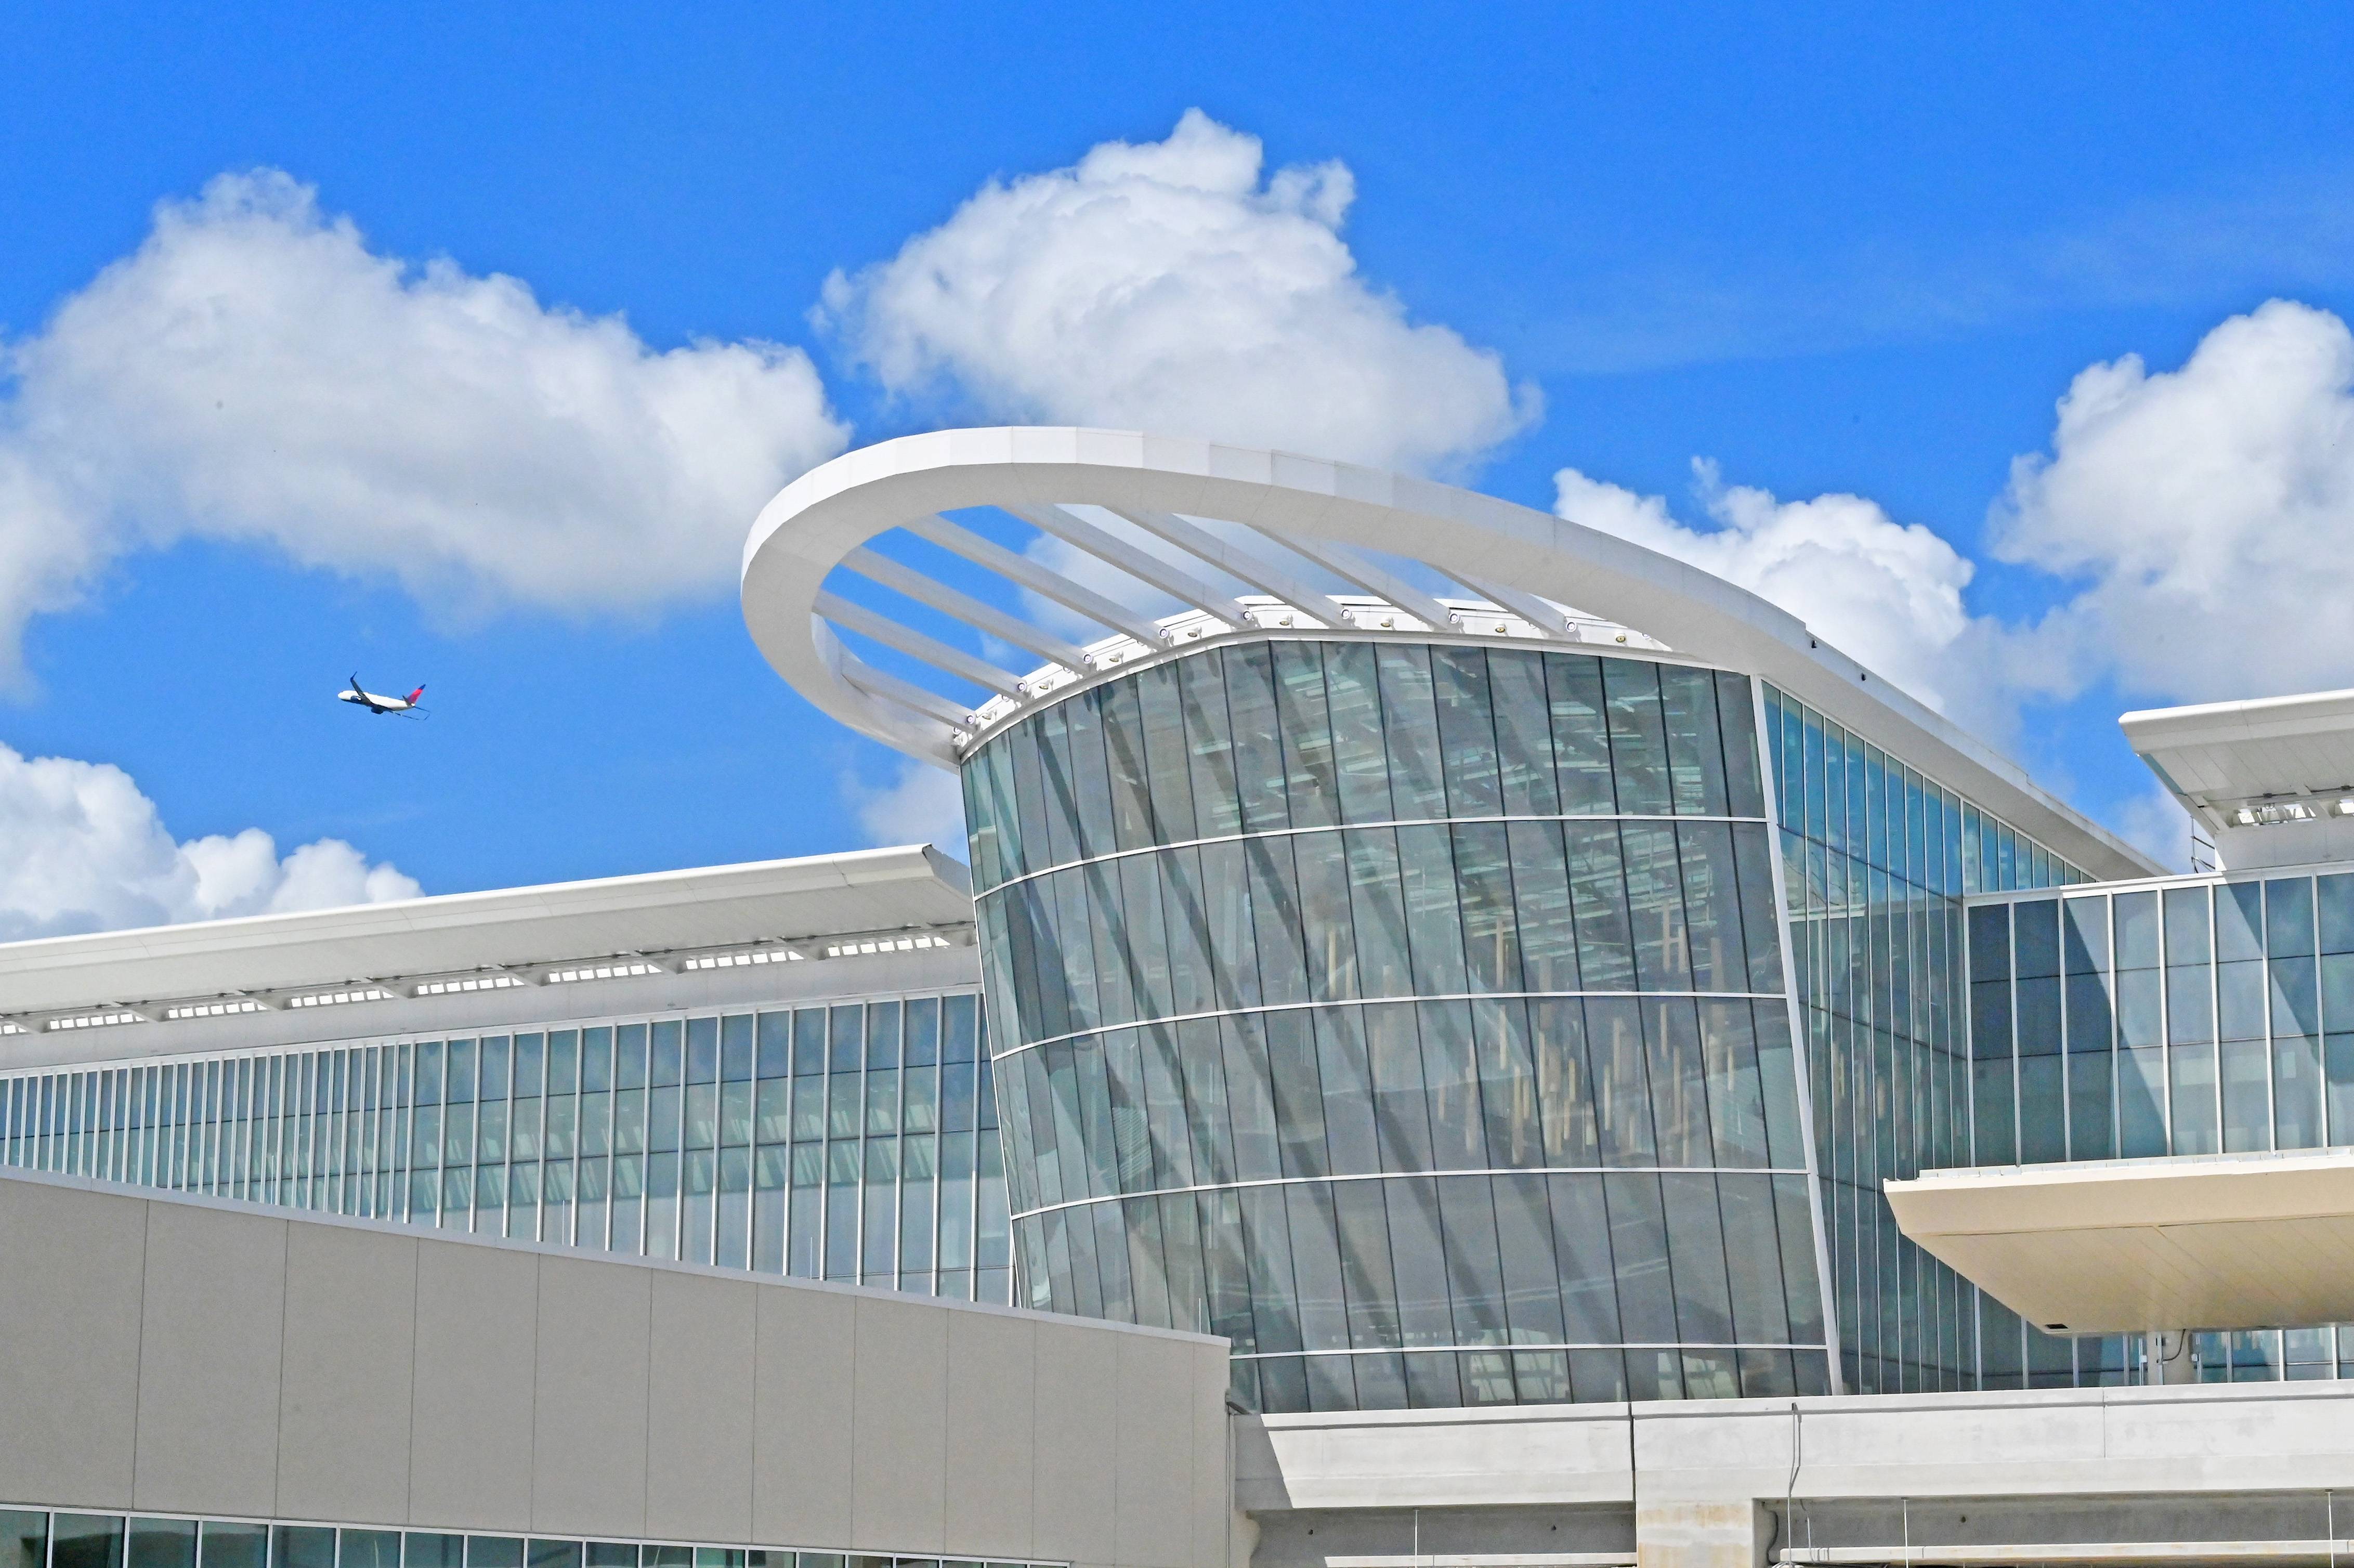 Terminal C at Orlando International Airport. Photo by Greater Orlando Aviation Authority (GOAA)